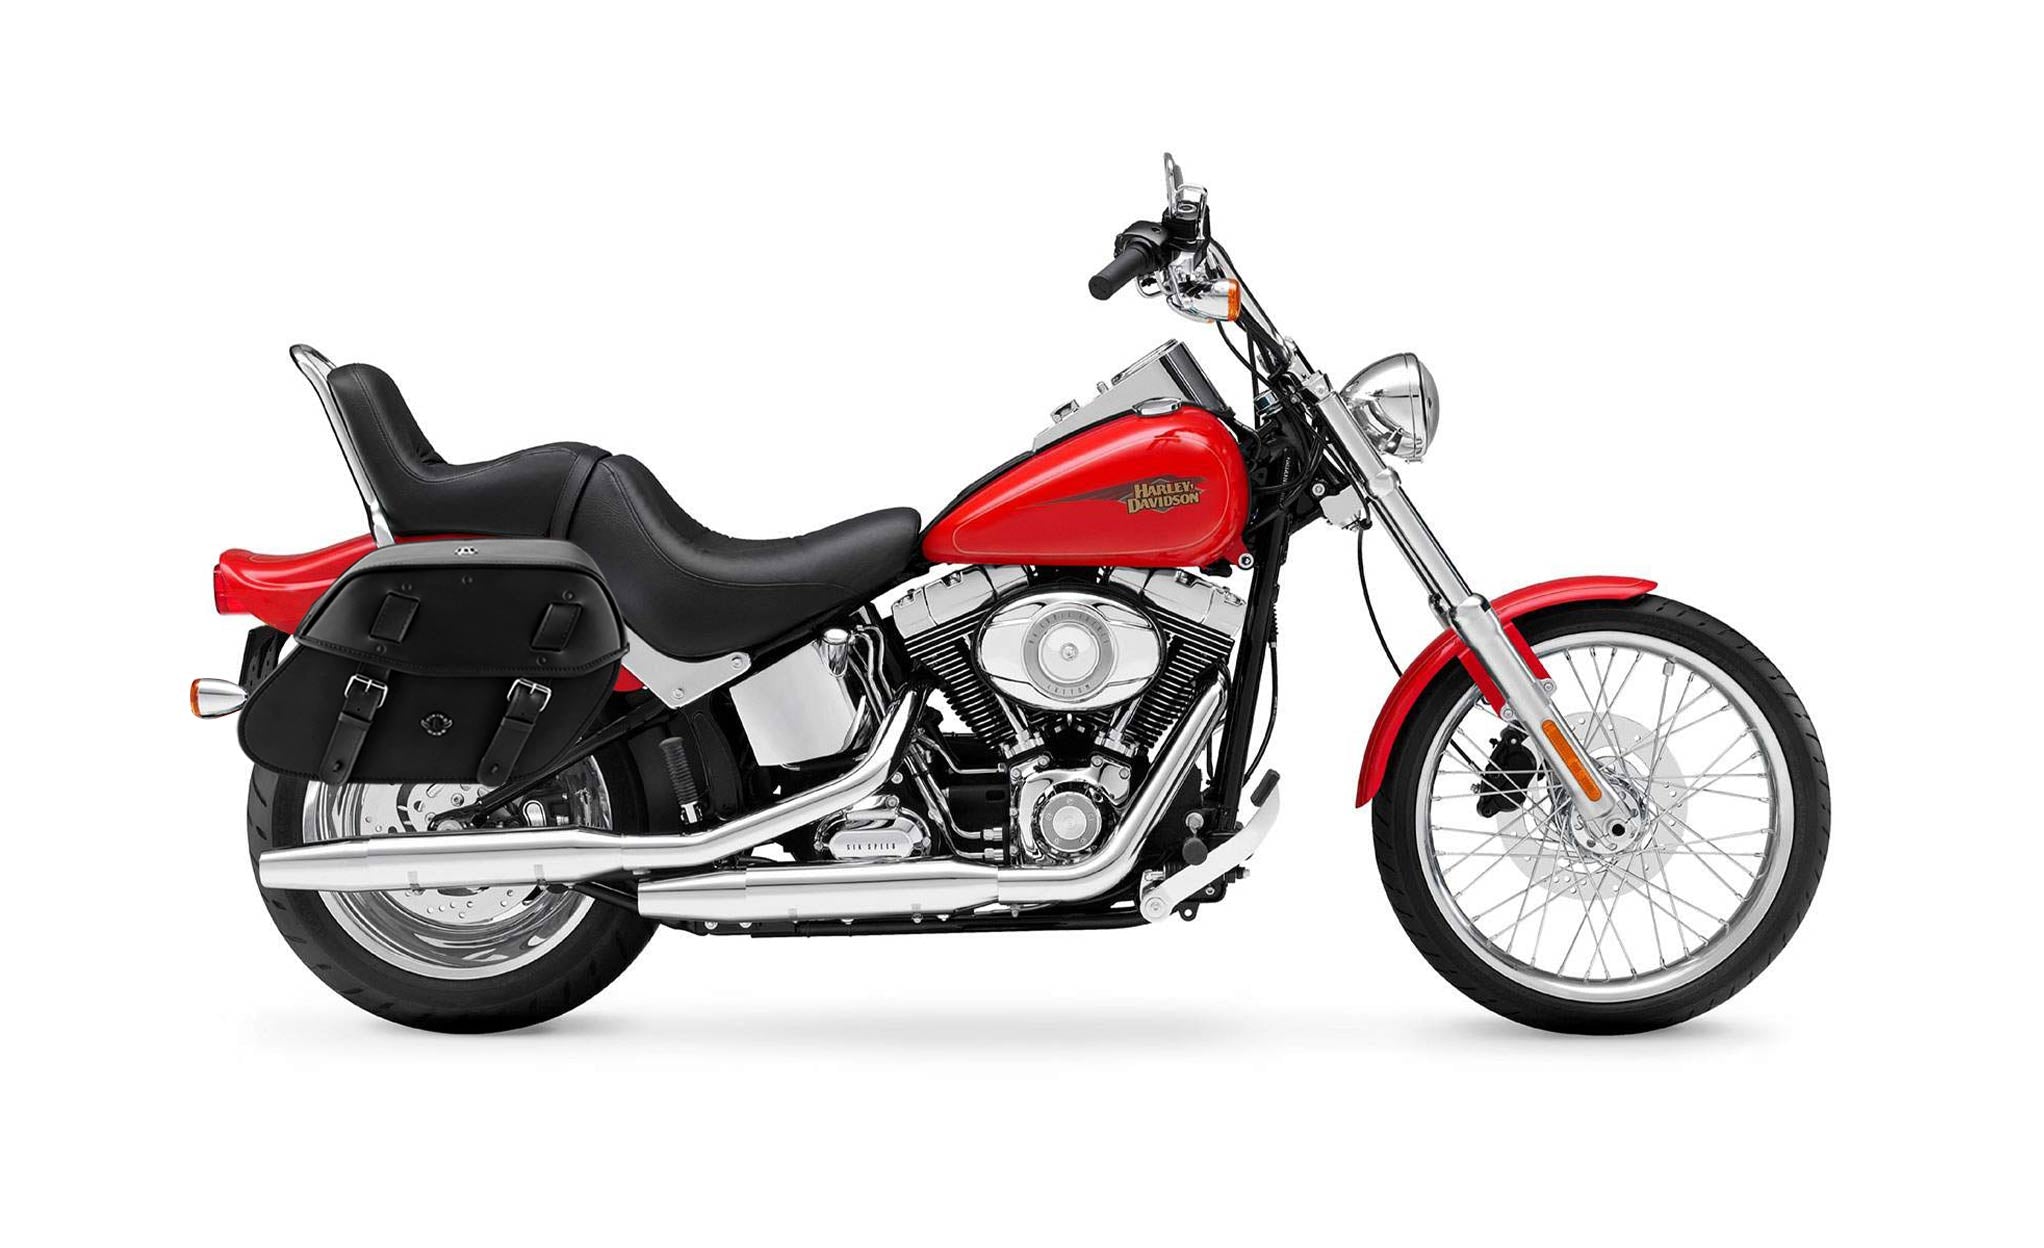 Viking Odin Large Leather Motorcycle Saddlebags For Harley Softail Custom Fxstc on Bike Photo @expand